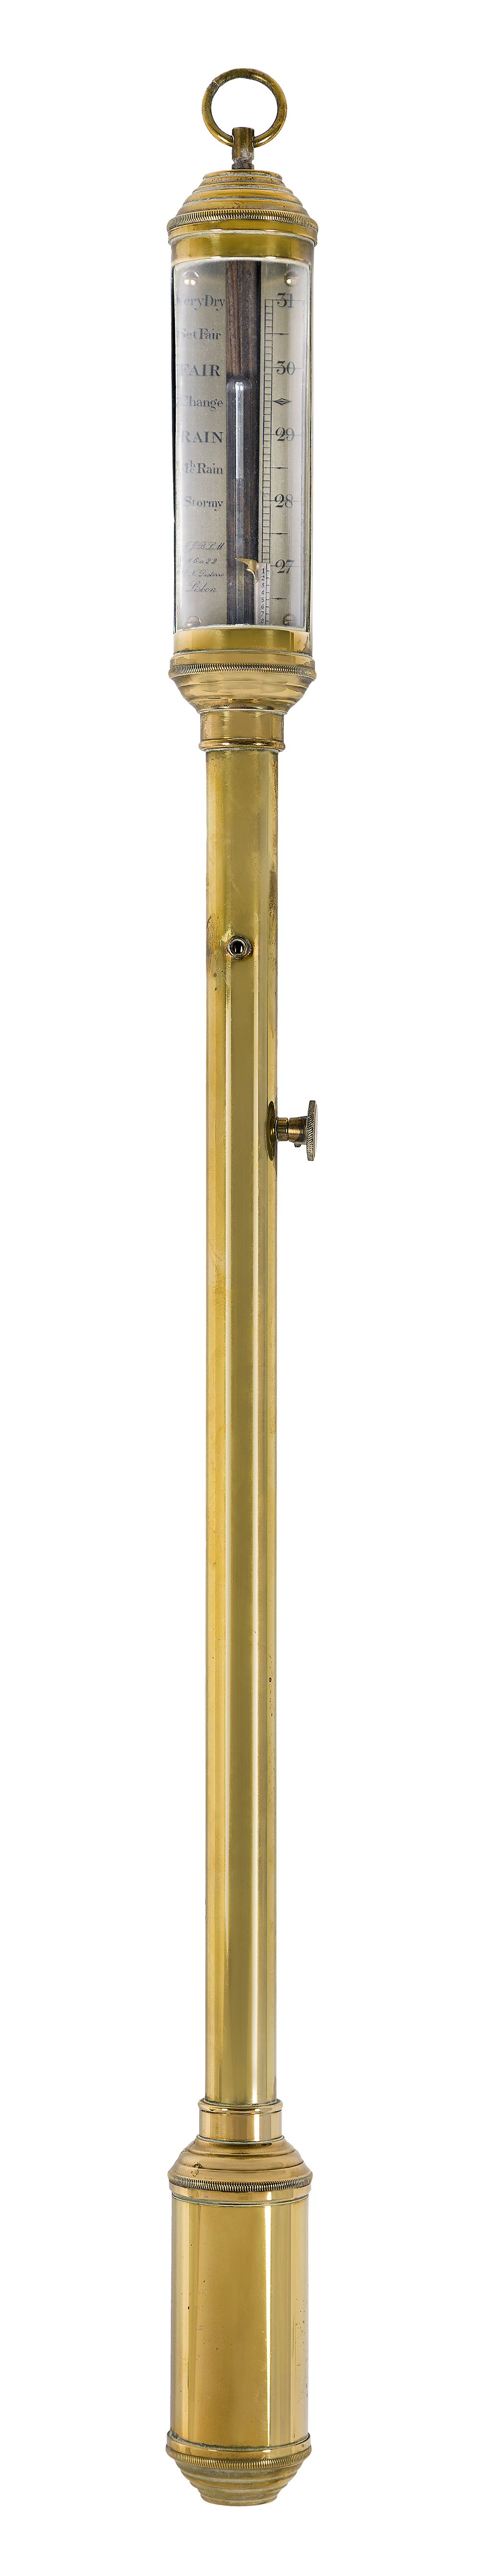 A Portuguese brass marine stick barometer, R.N. Desterro, Lisbon, in slender brass case with